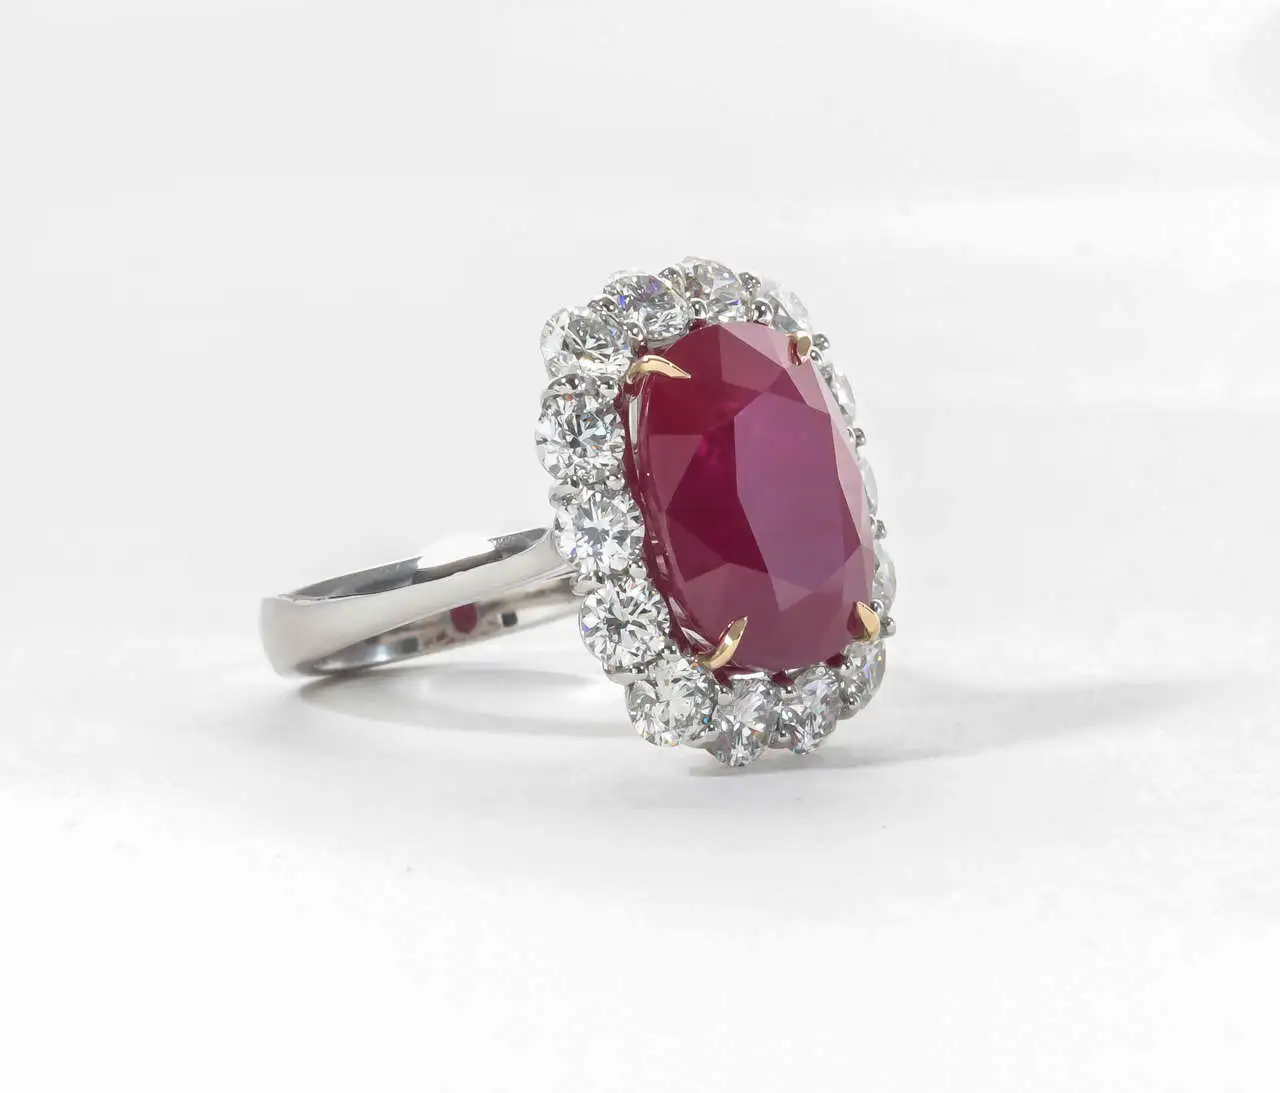 10 Carat Burma Ruby Diamond Ring